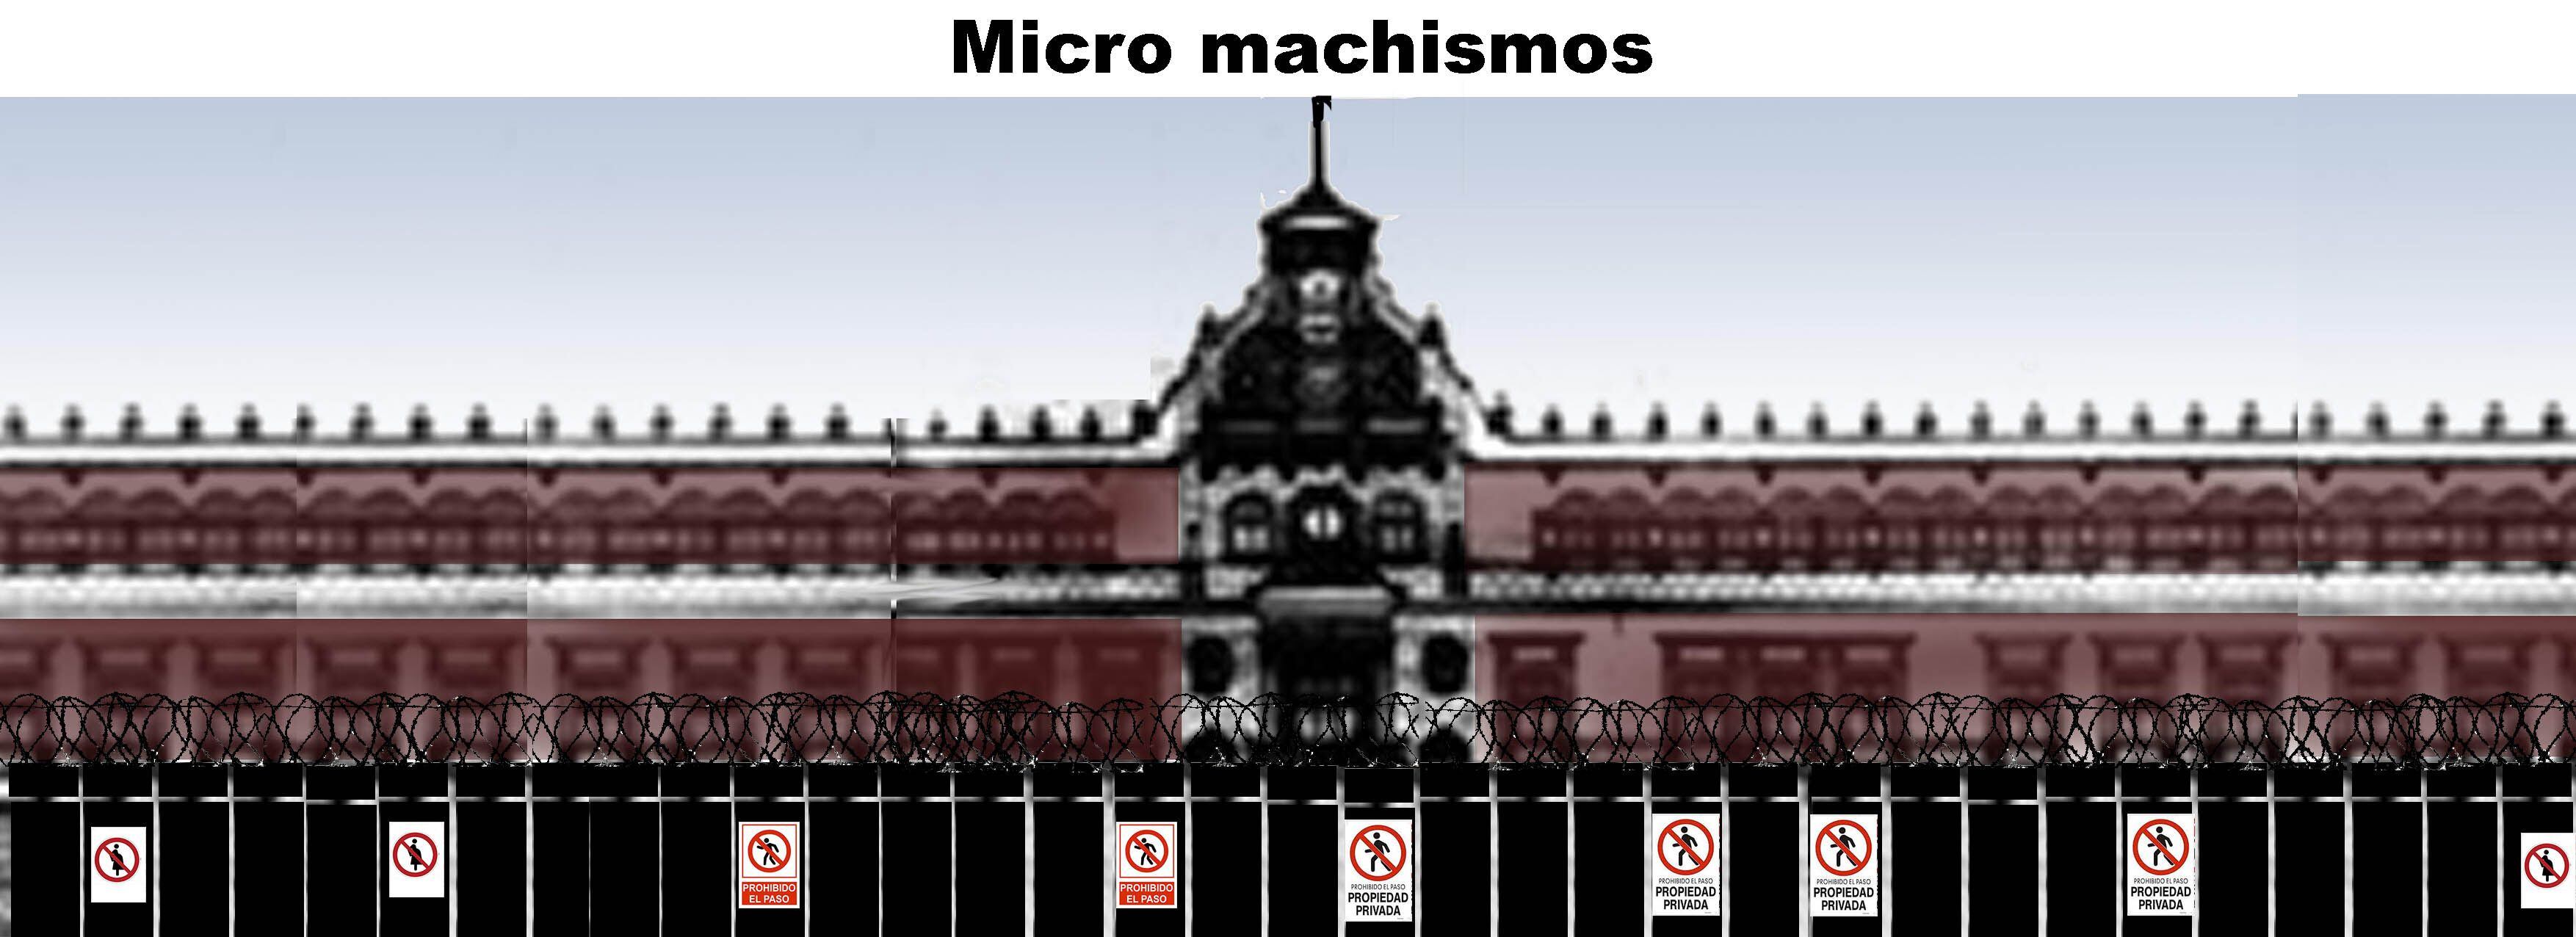 Micro machismos